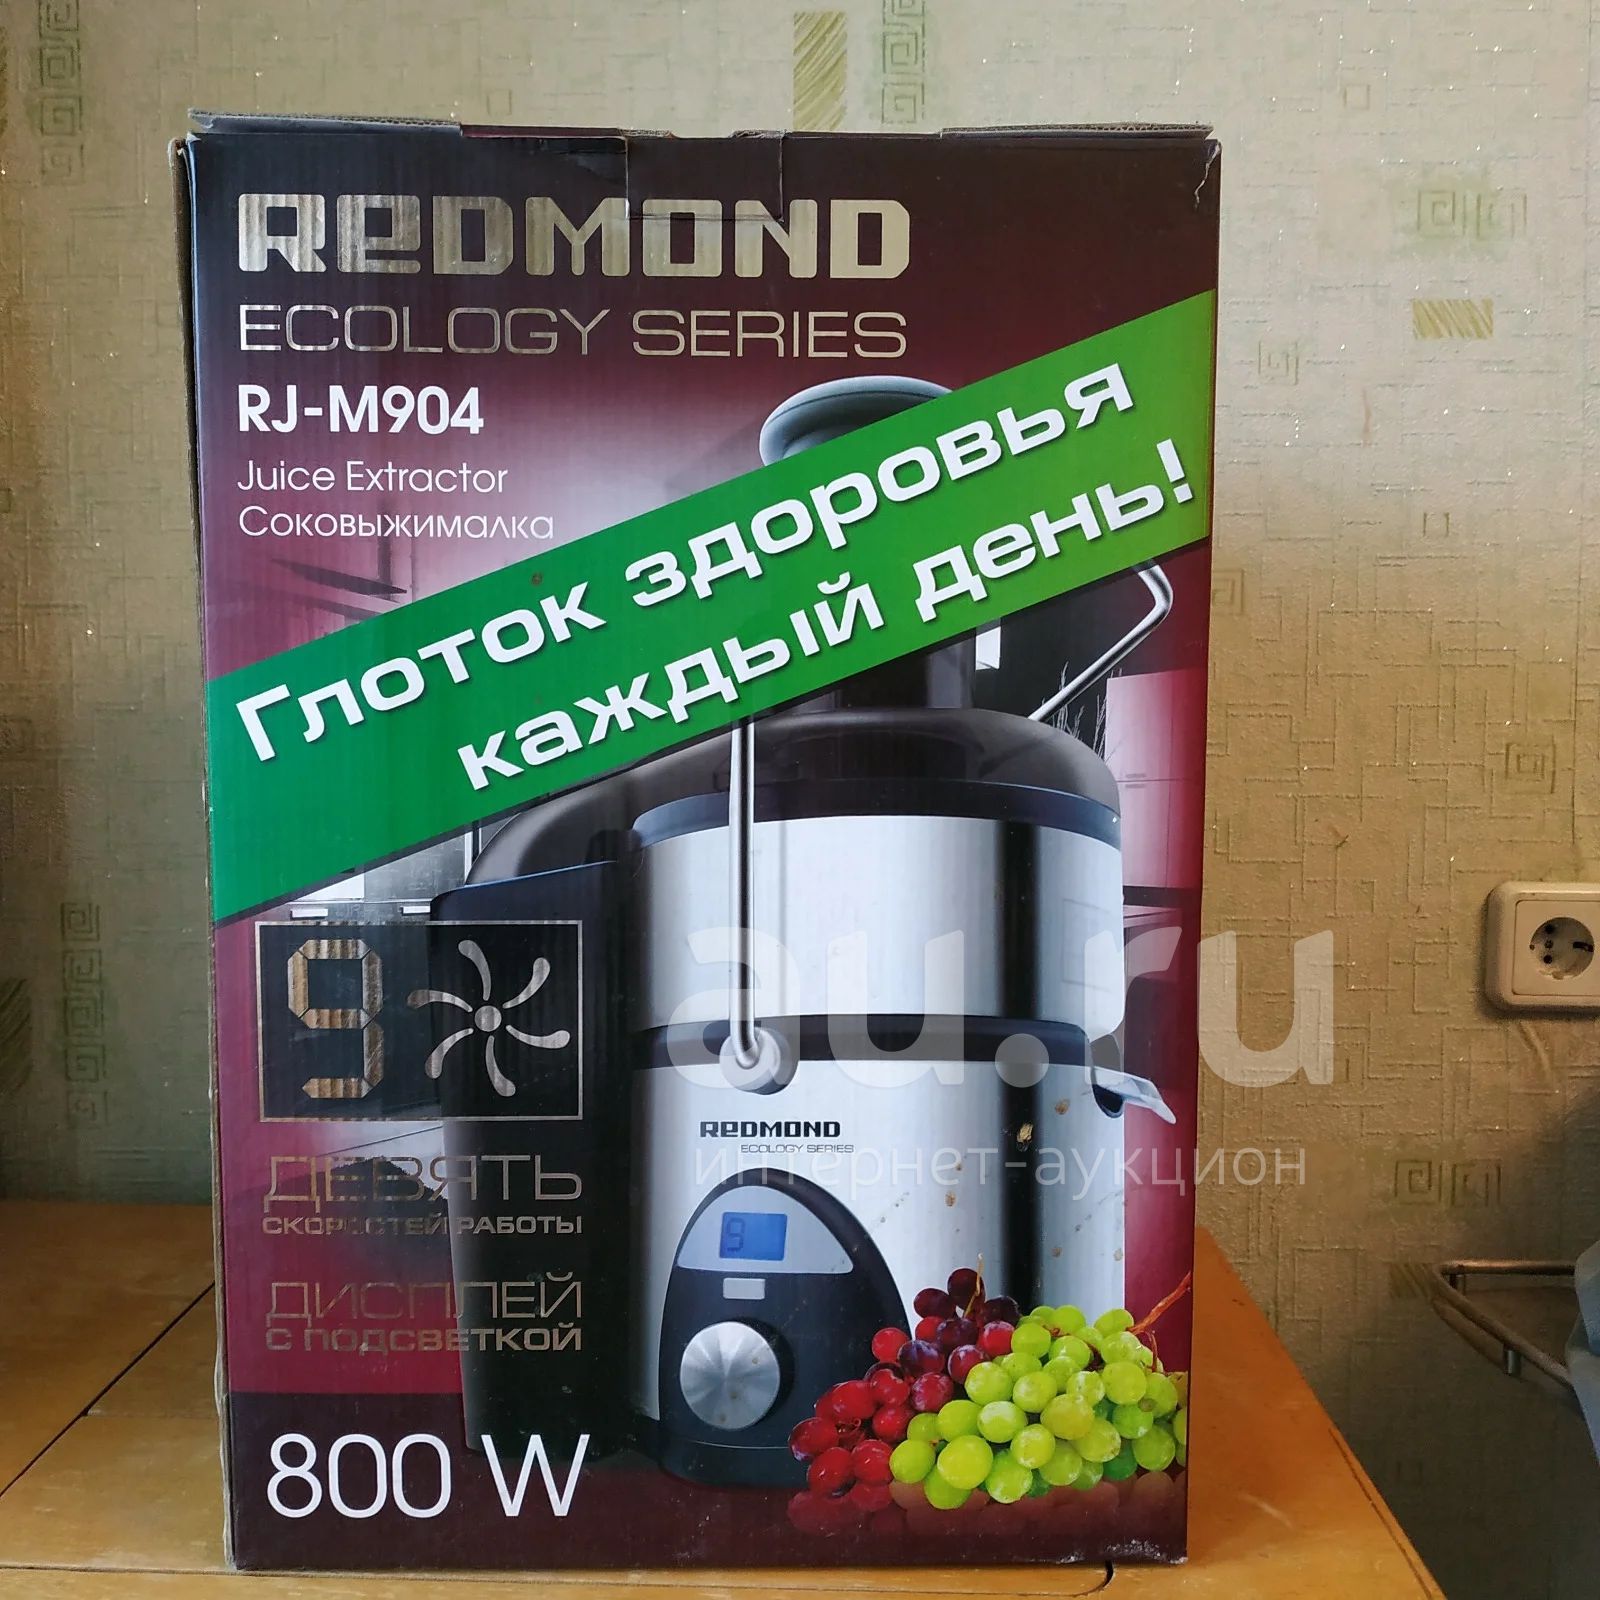 Redmond ecology series. Соковыжималка Redmond RJ-m904. Redmond RJ-m904 инструкция. Redmond Juice Extractor RJ-m908.